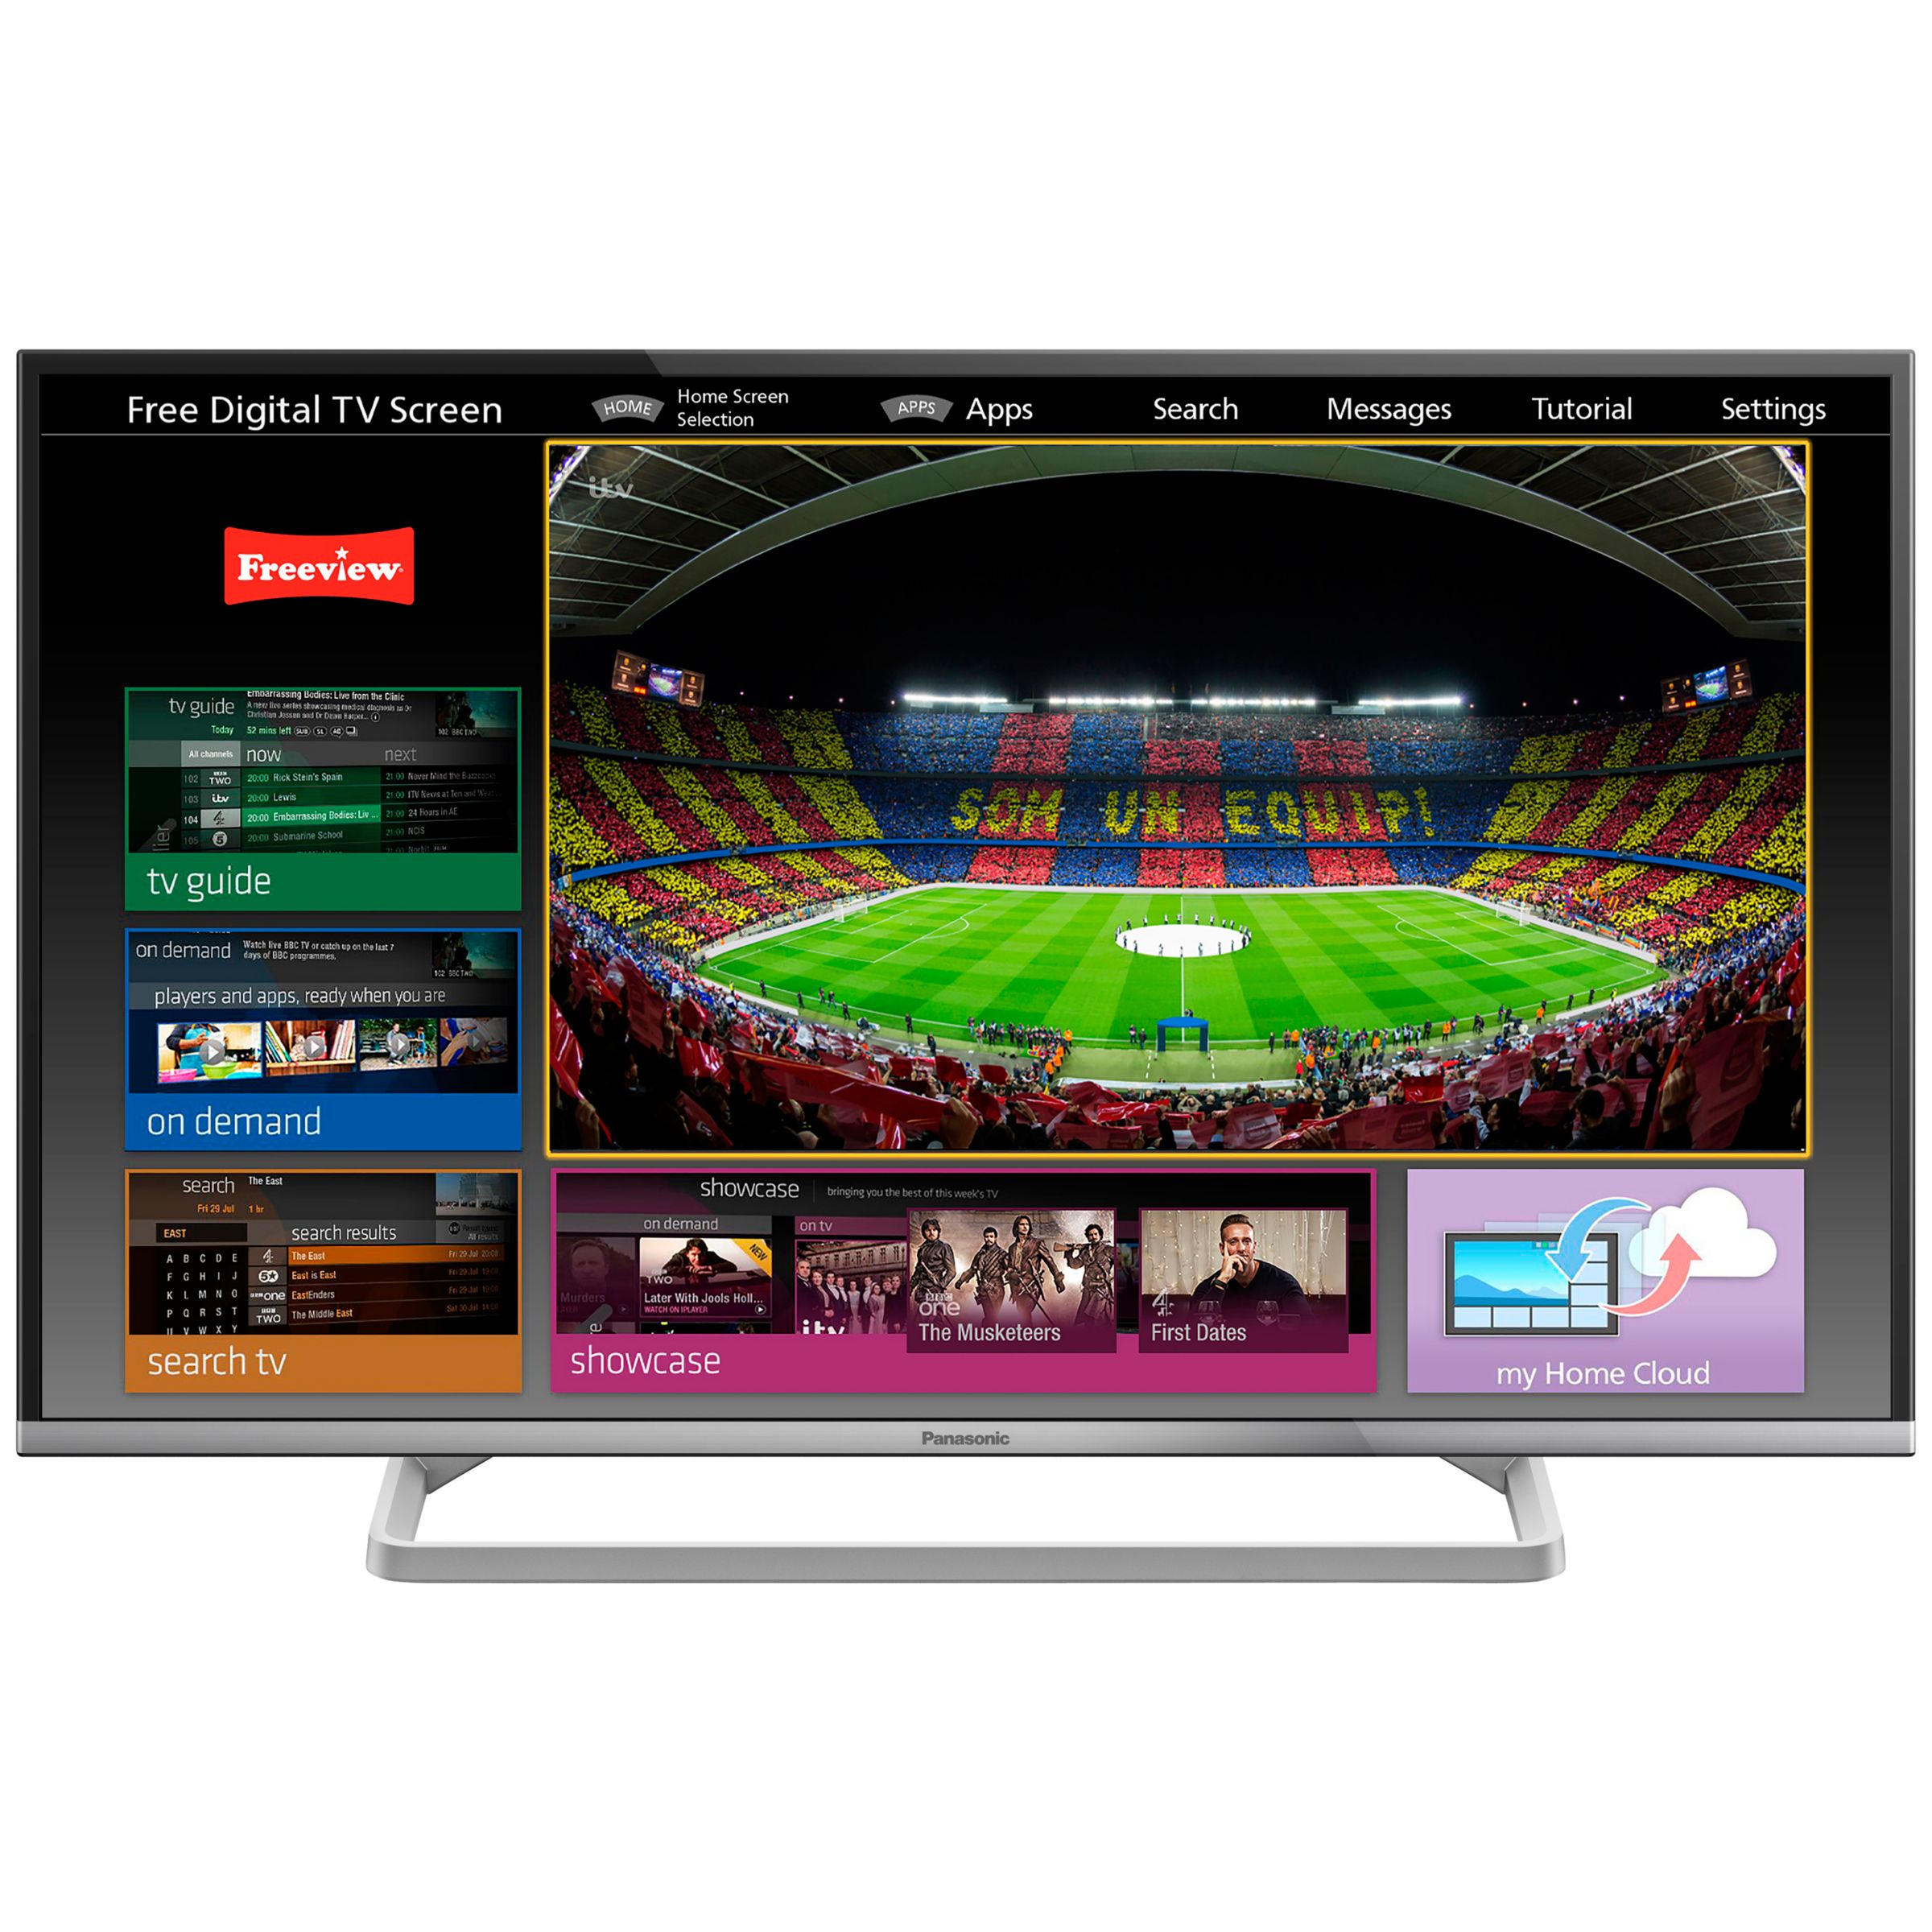 Panasonic Viera TX-39AS600 LED HD 1080p Smart TV, 39